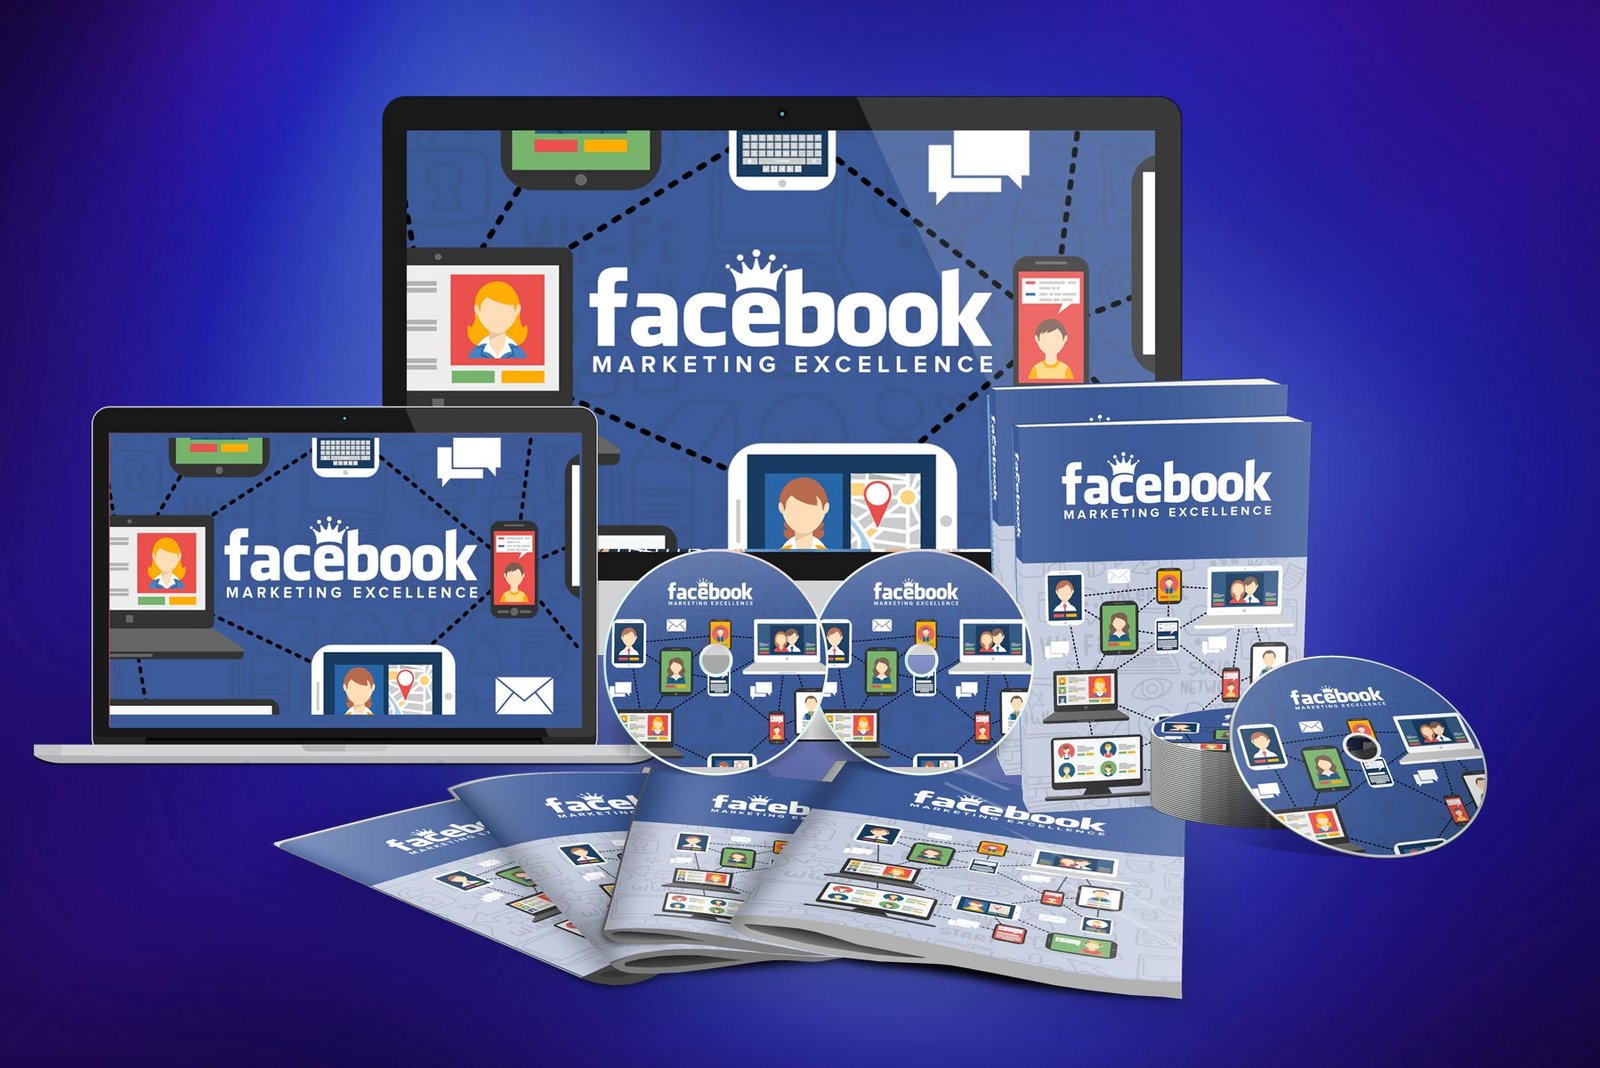 facebook marketing in chennai, web design in chennai, web design company in chennai